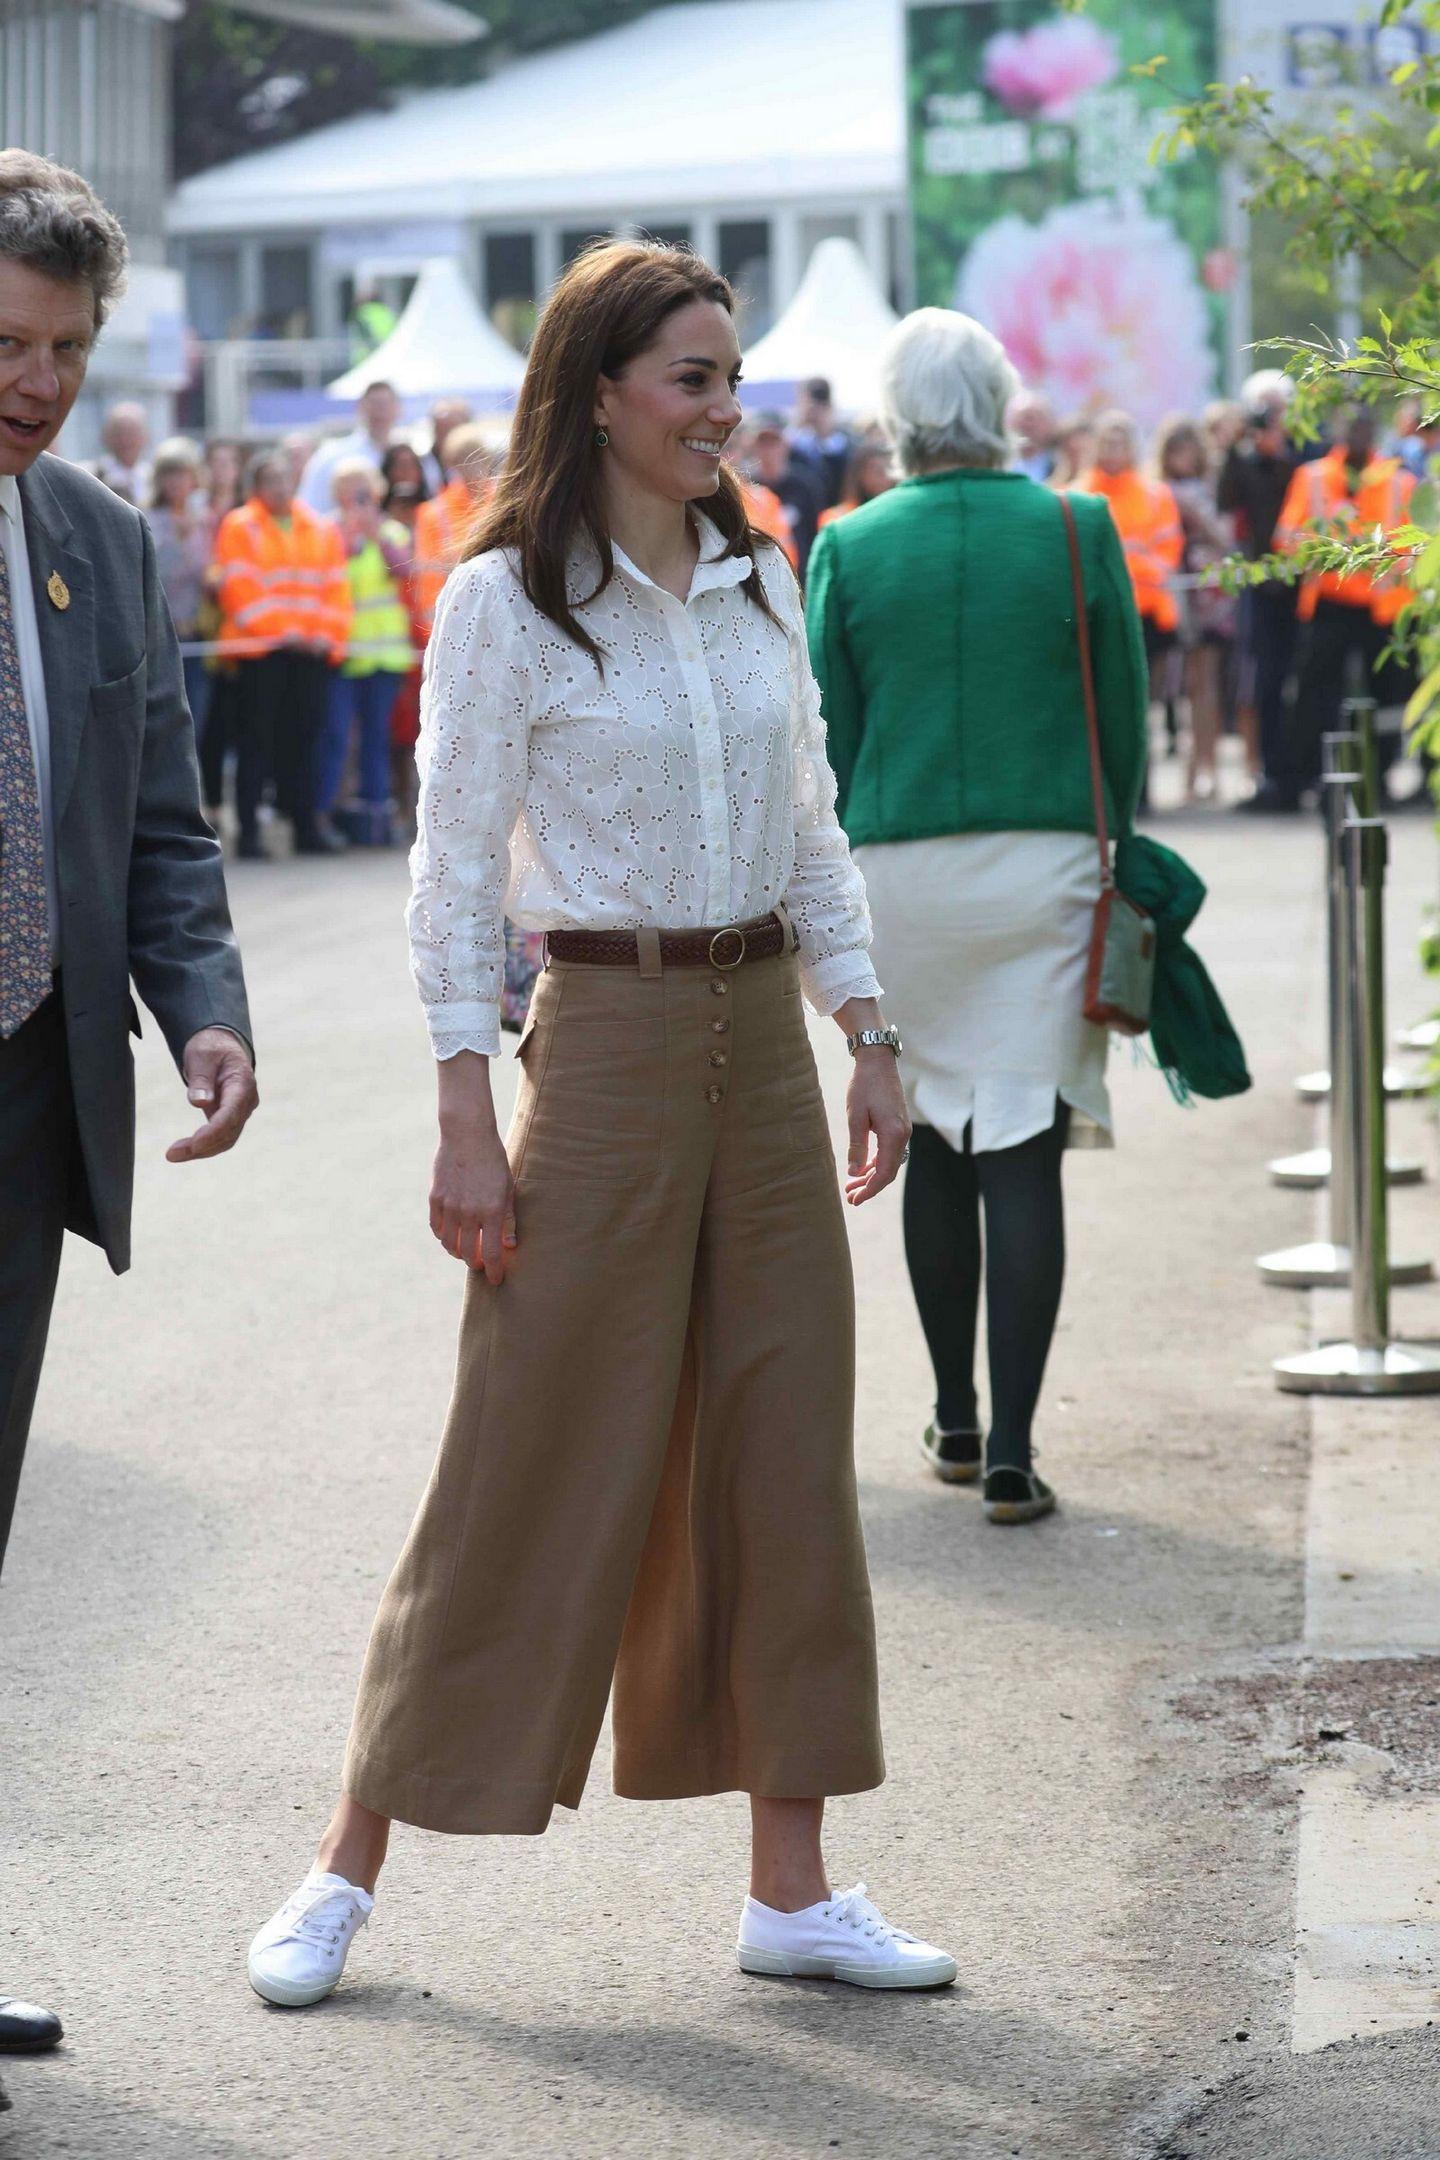  Kate Middleton at Royal Hospital Chelsea Flower Show in London